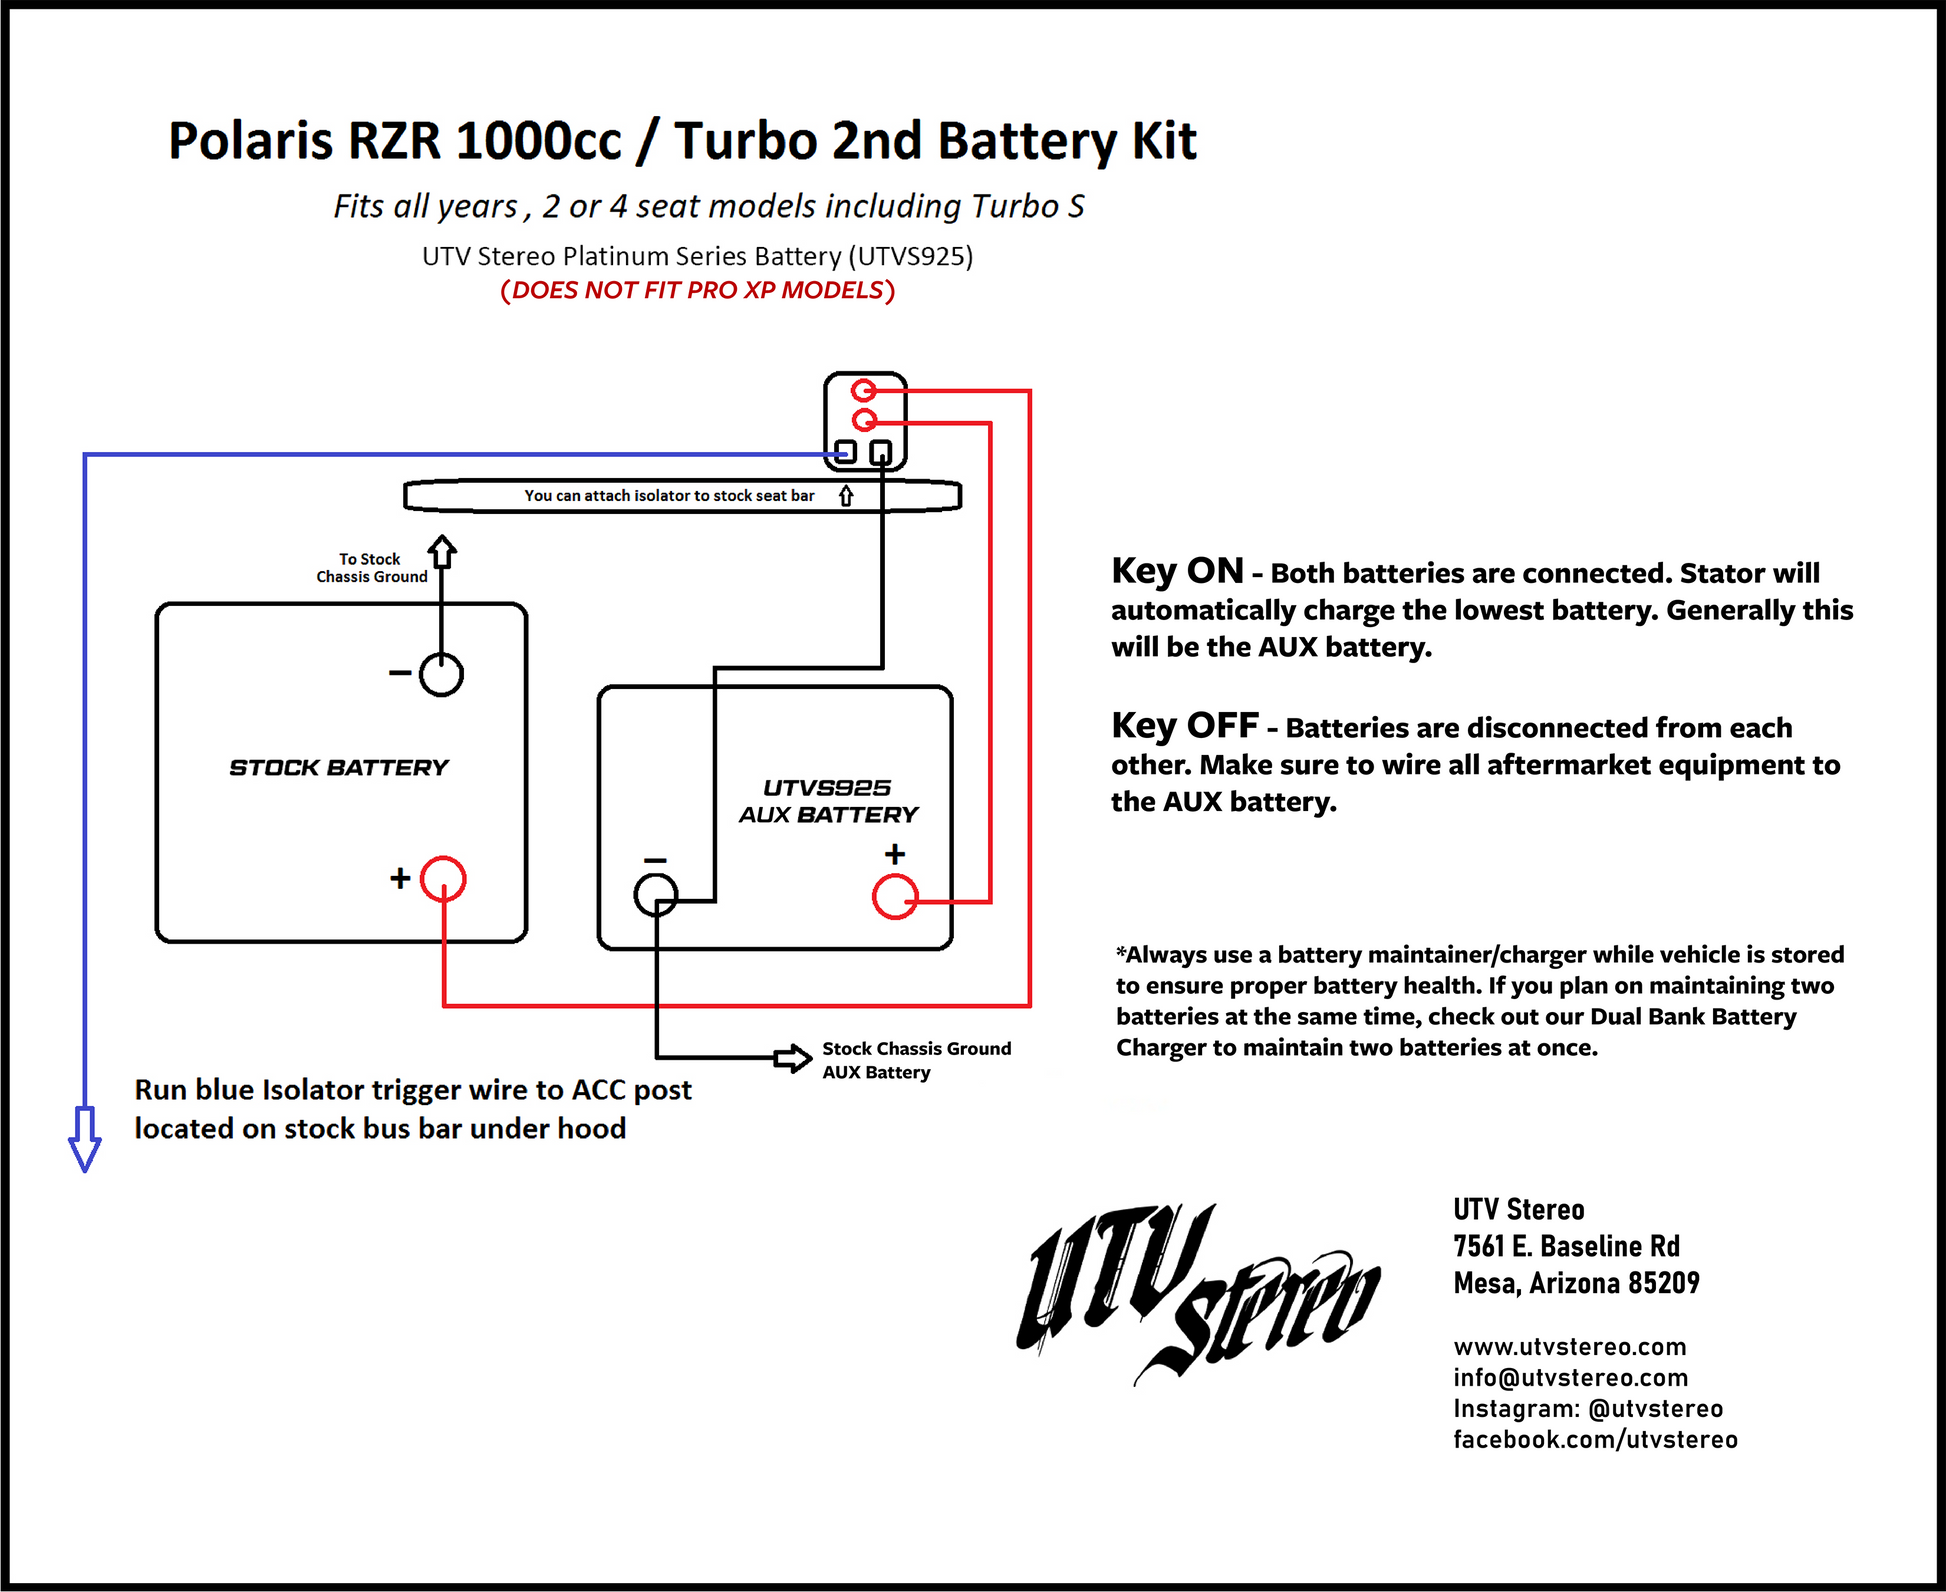 Polaris RZR 2nd Battery Kit